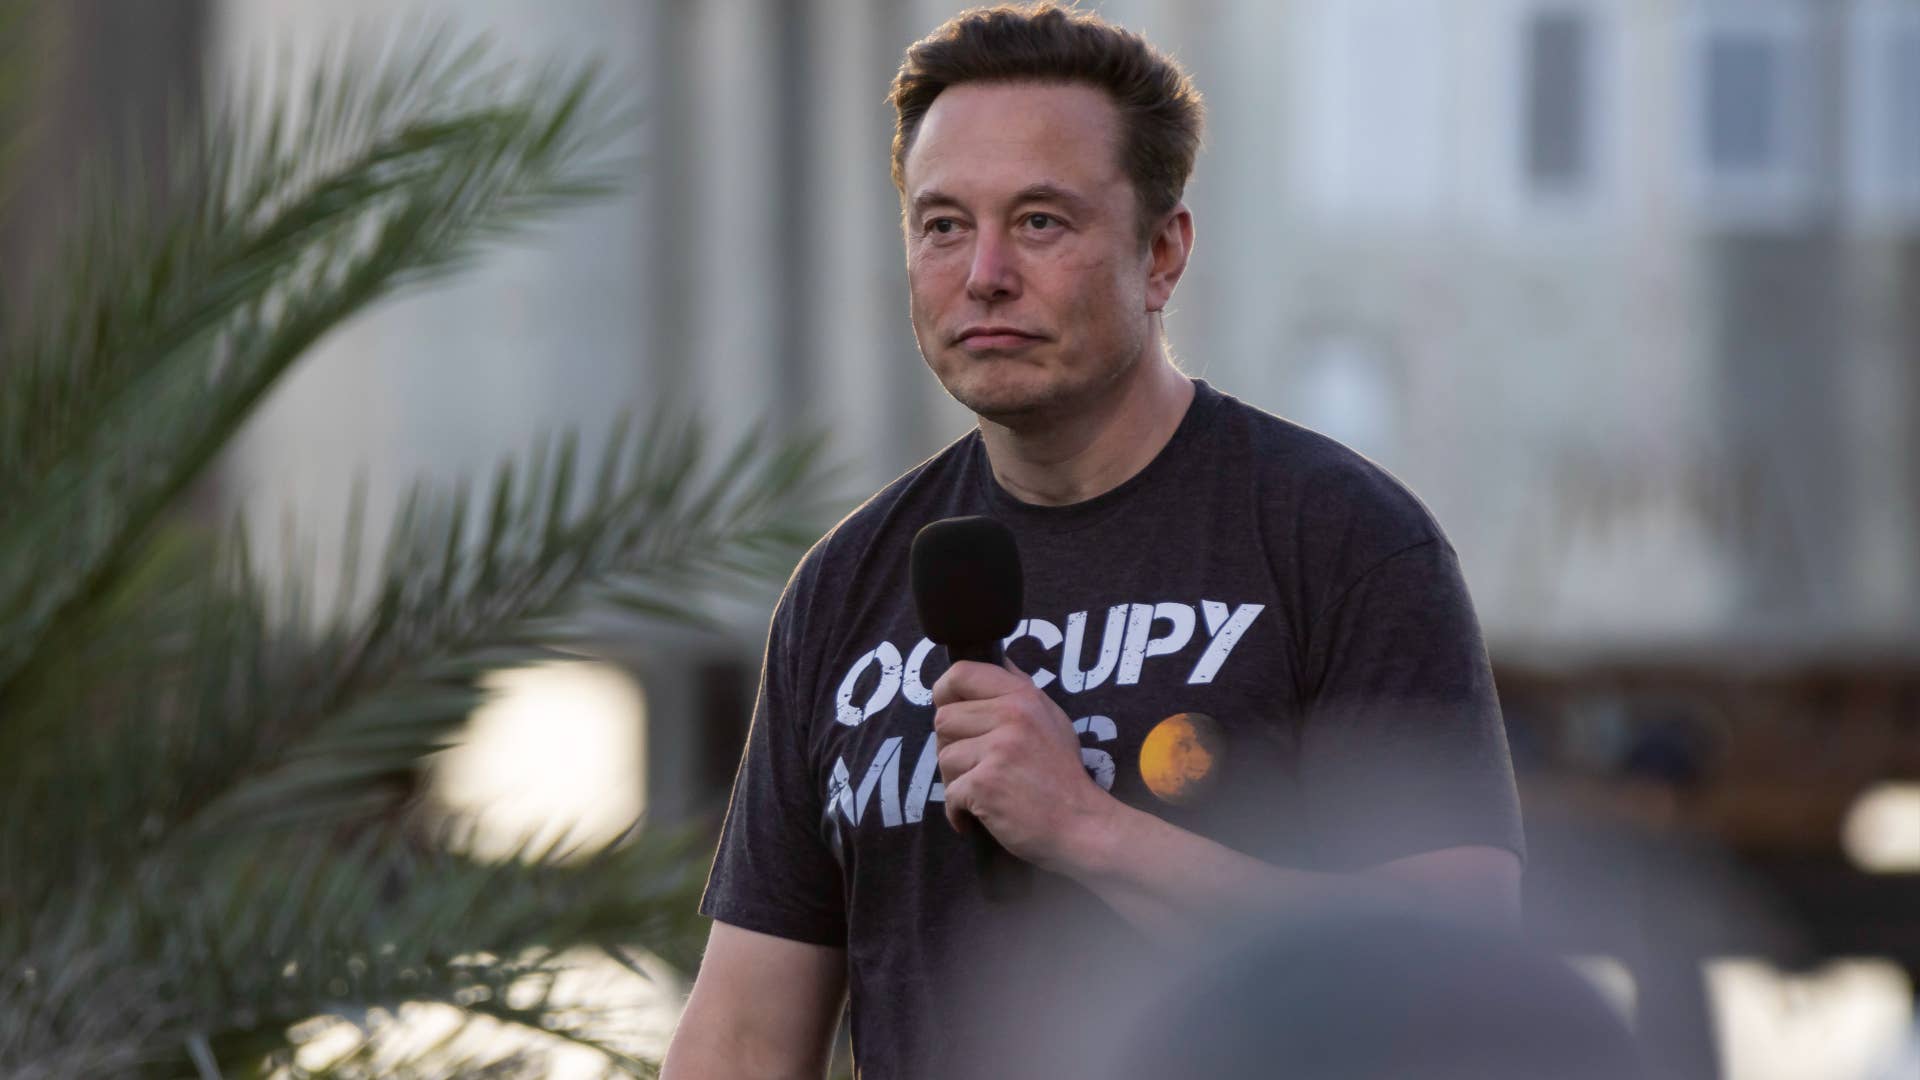 Elon Musk is seen holding a microphone